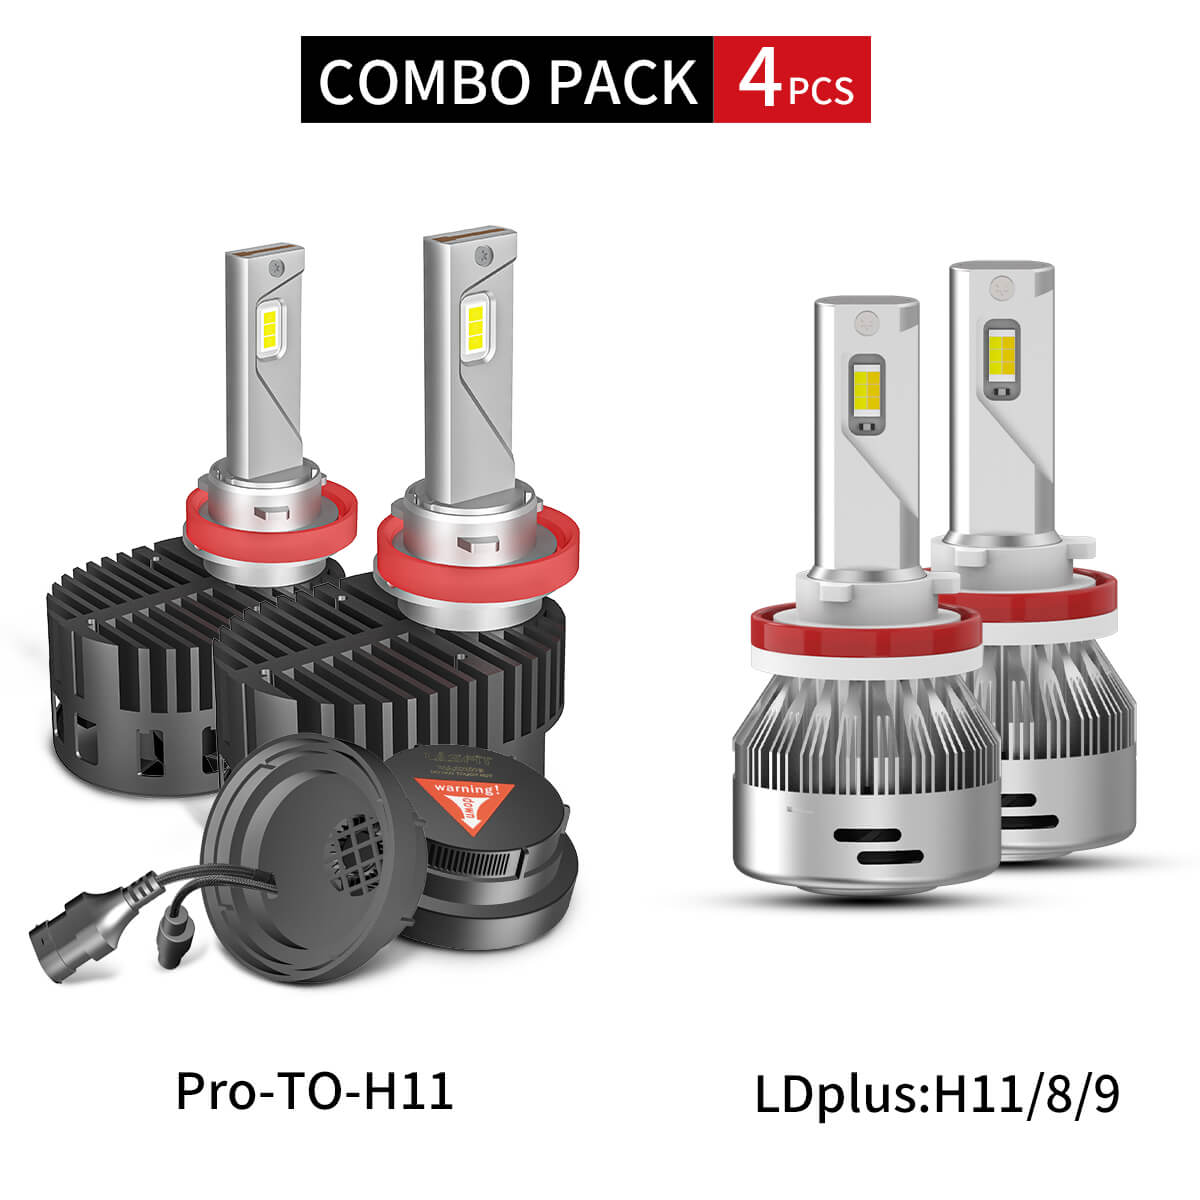 20Twenty Lighting® Perfect Fit LED Headlights, H15 Bulbs – Sound Connection